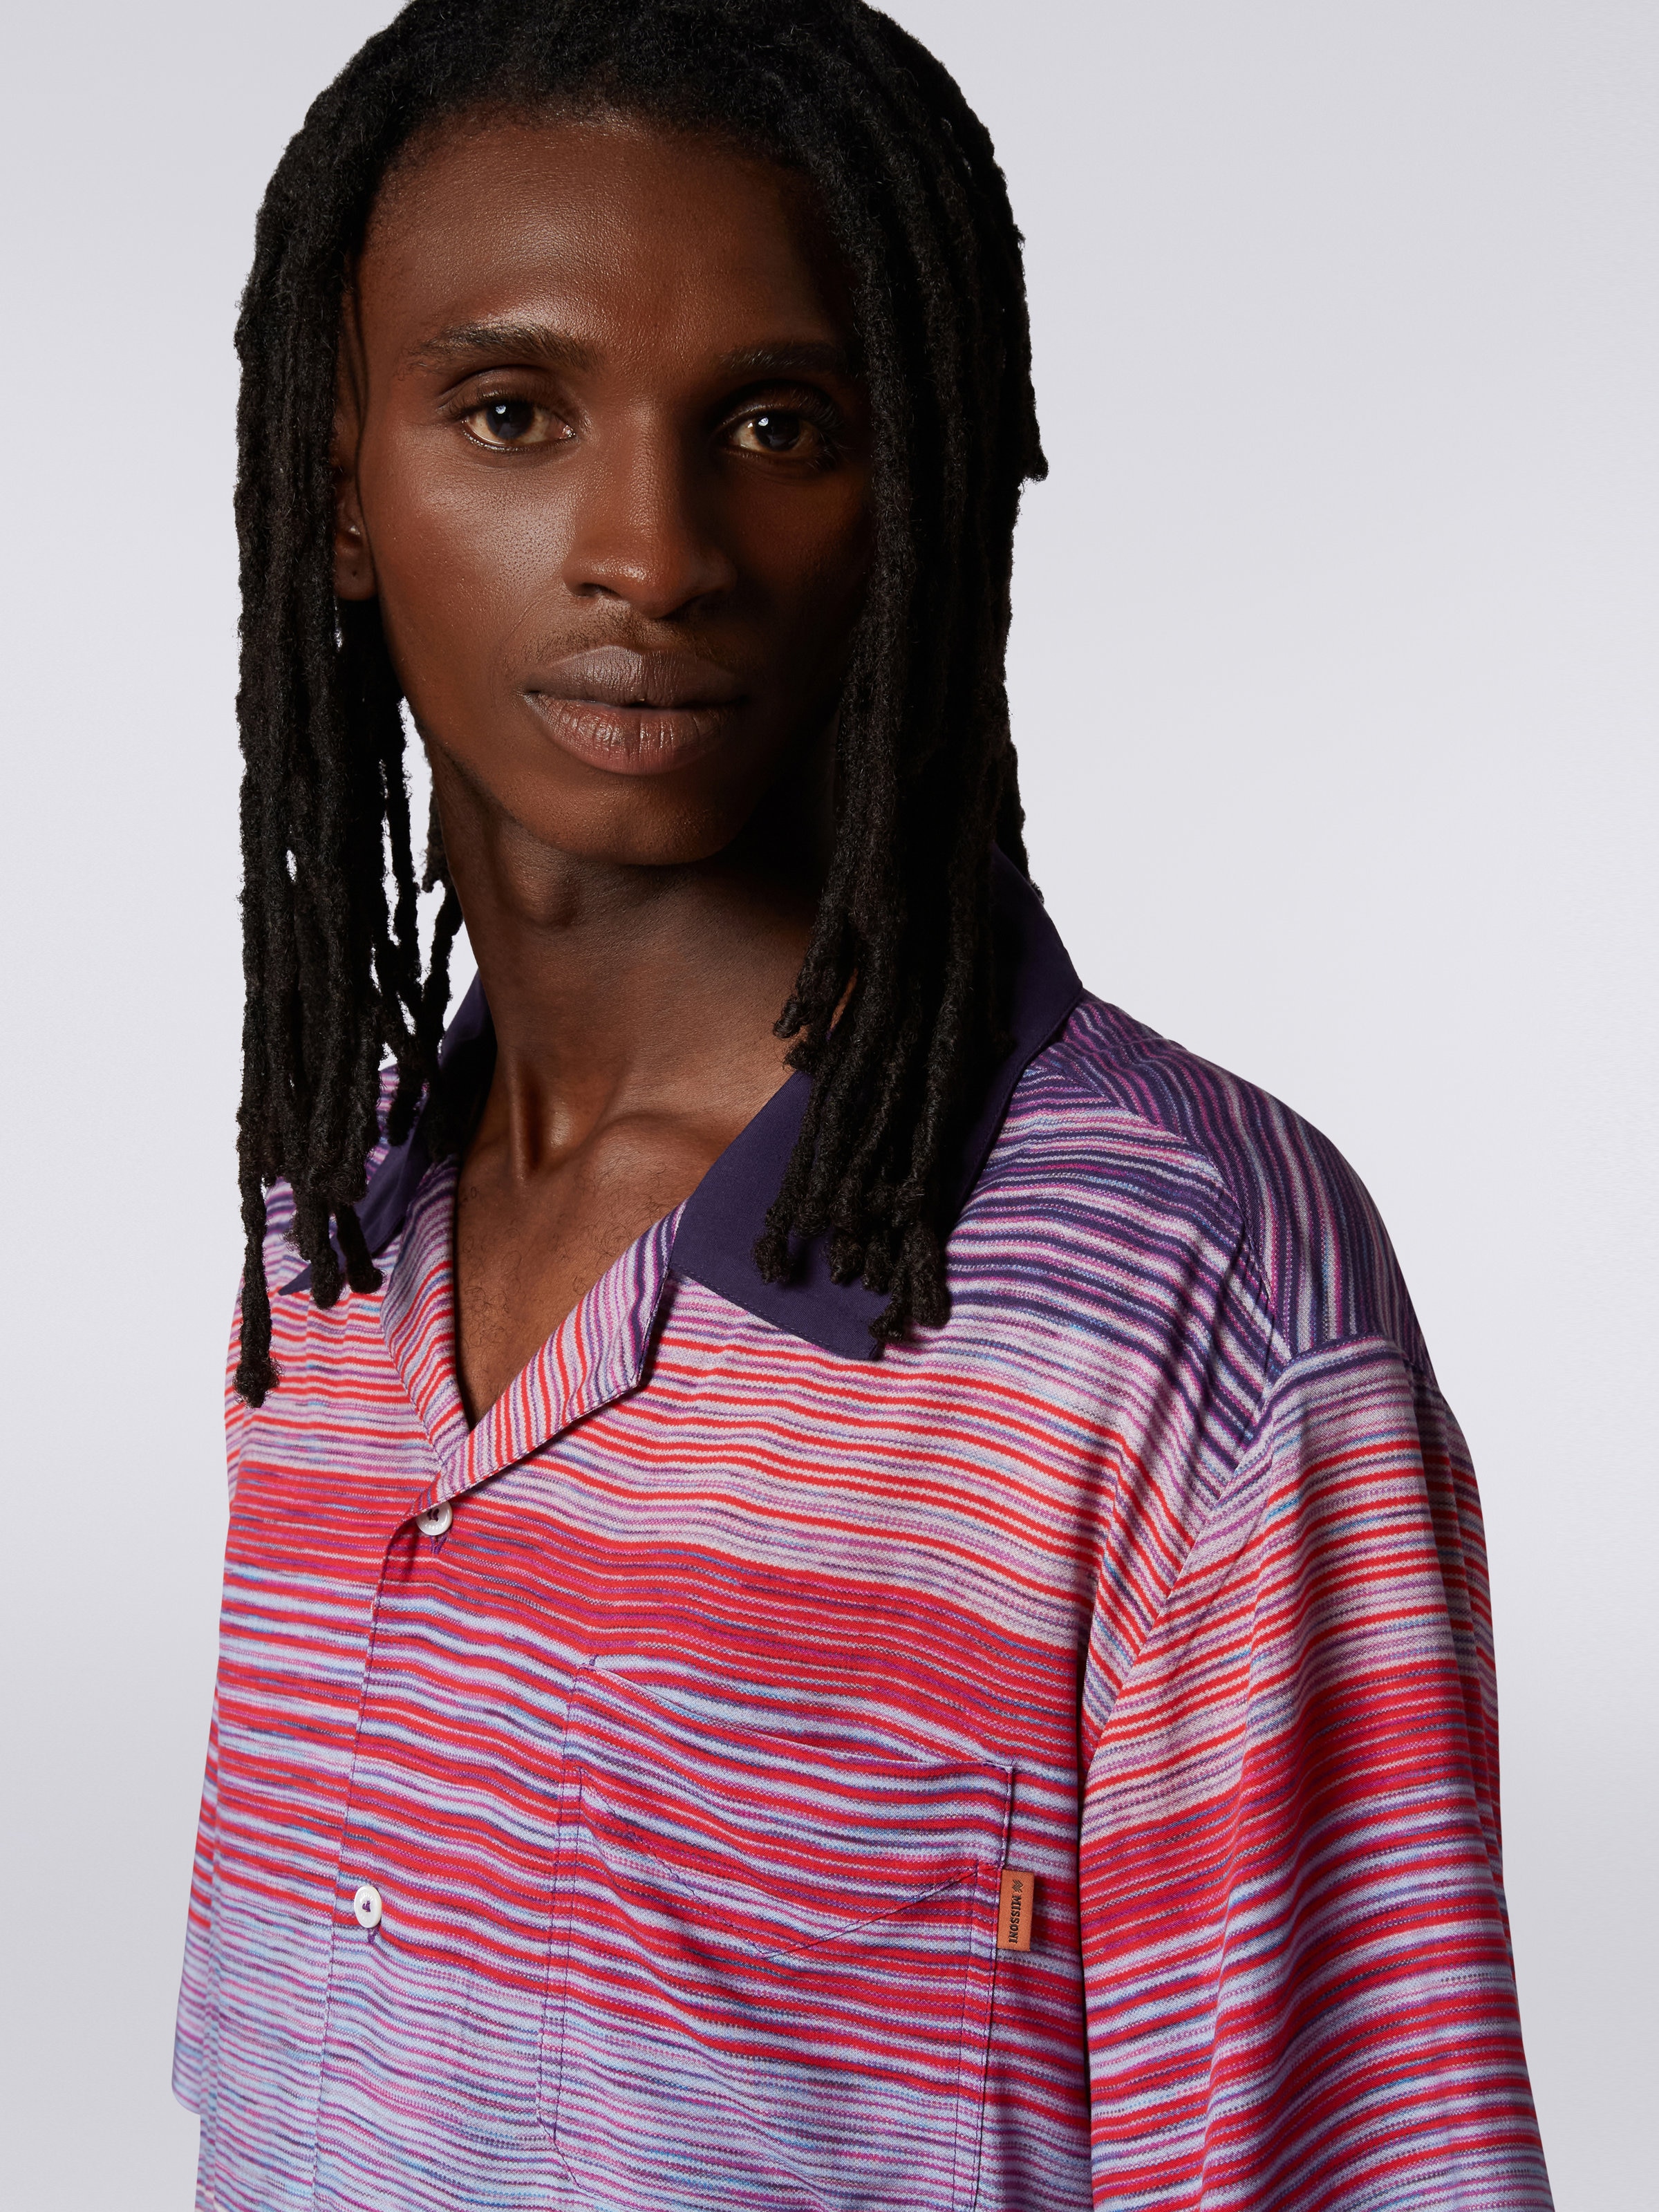 Short-sleeved cotton bowling shirt, Red, Purple & Light Blue - 4